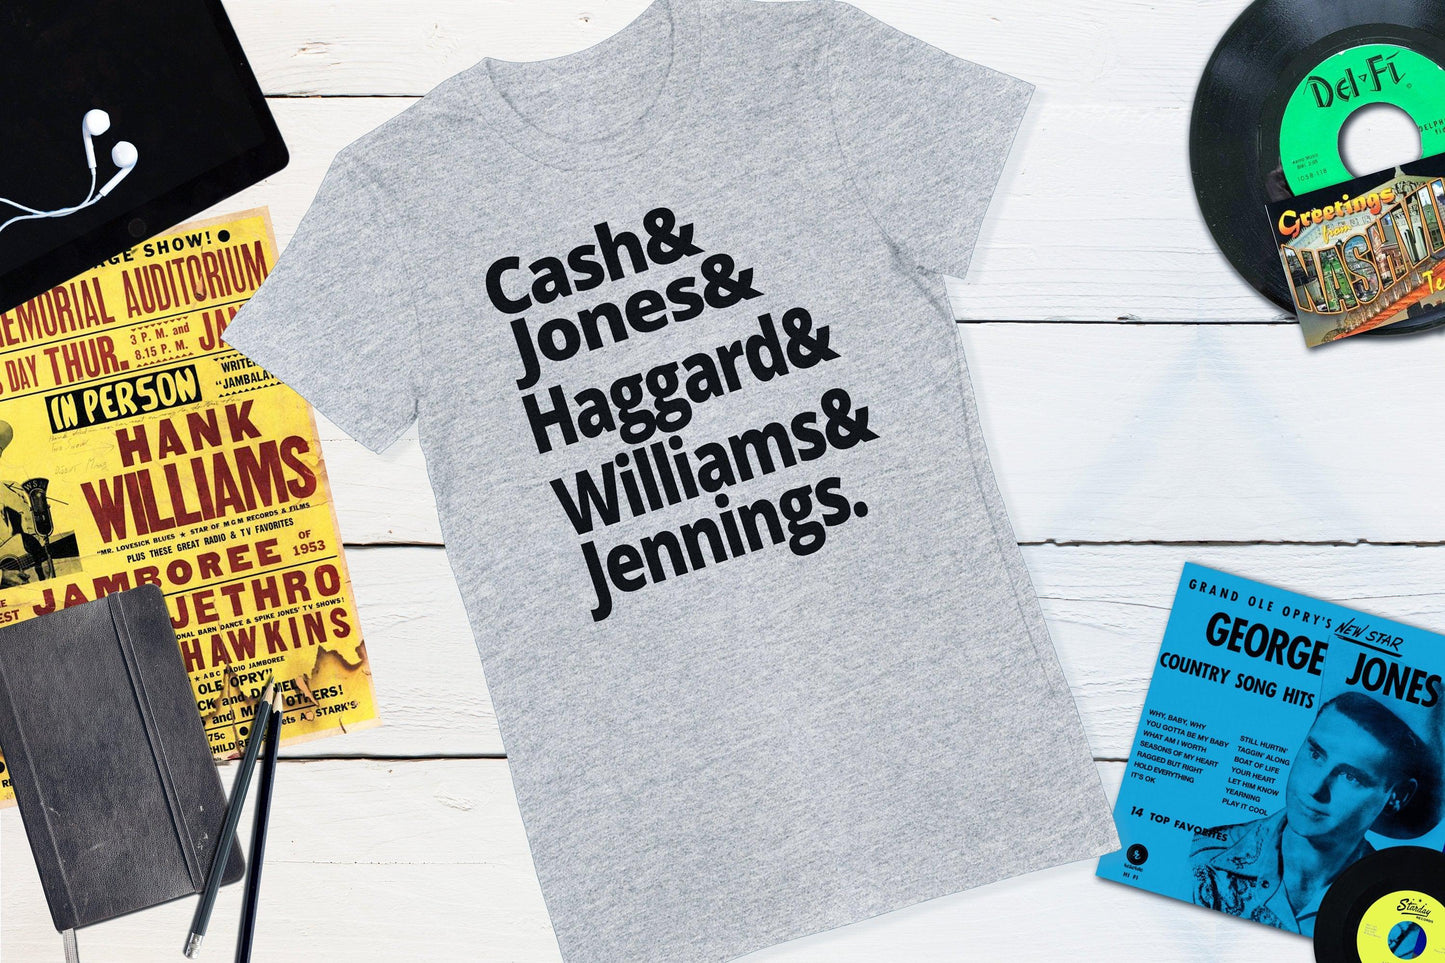 Legends of Country Music - Cash, Jones, Haggard, Williams and Jennings Women's Shirt-Women's T-shirt-Yesteeyear